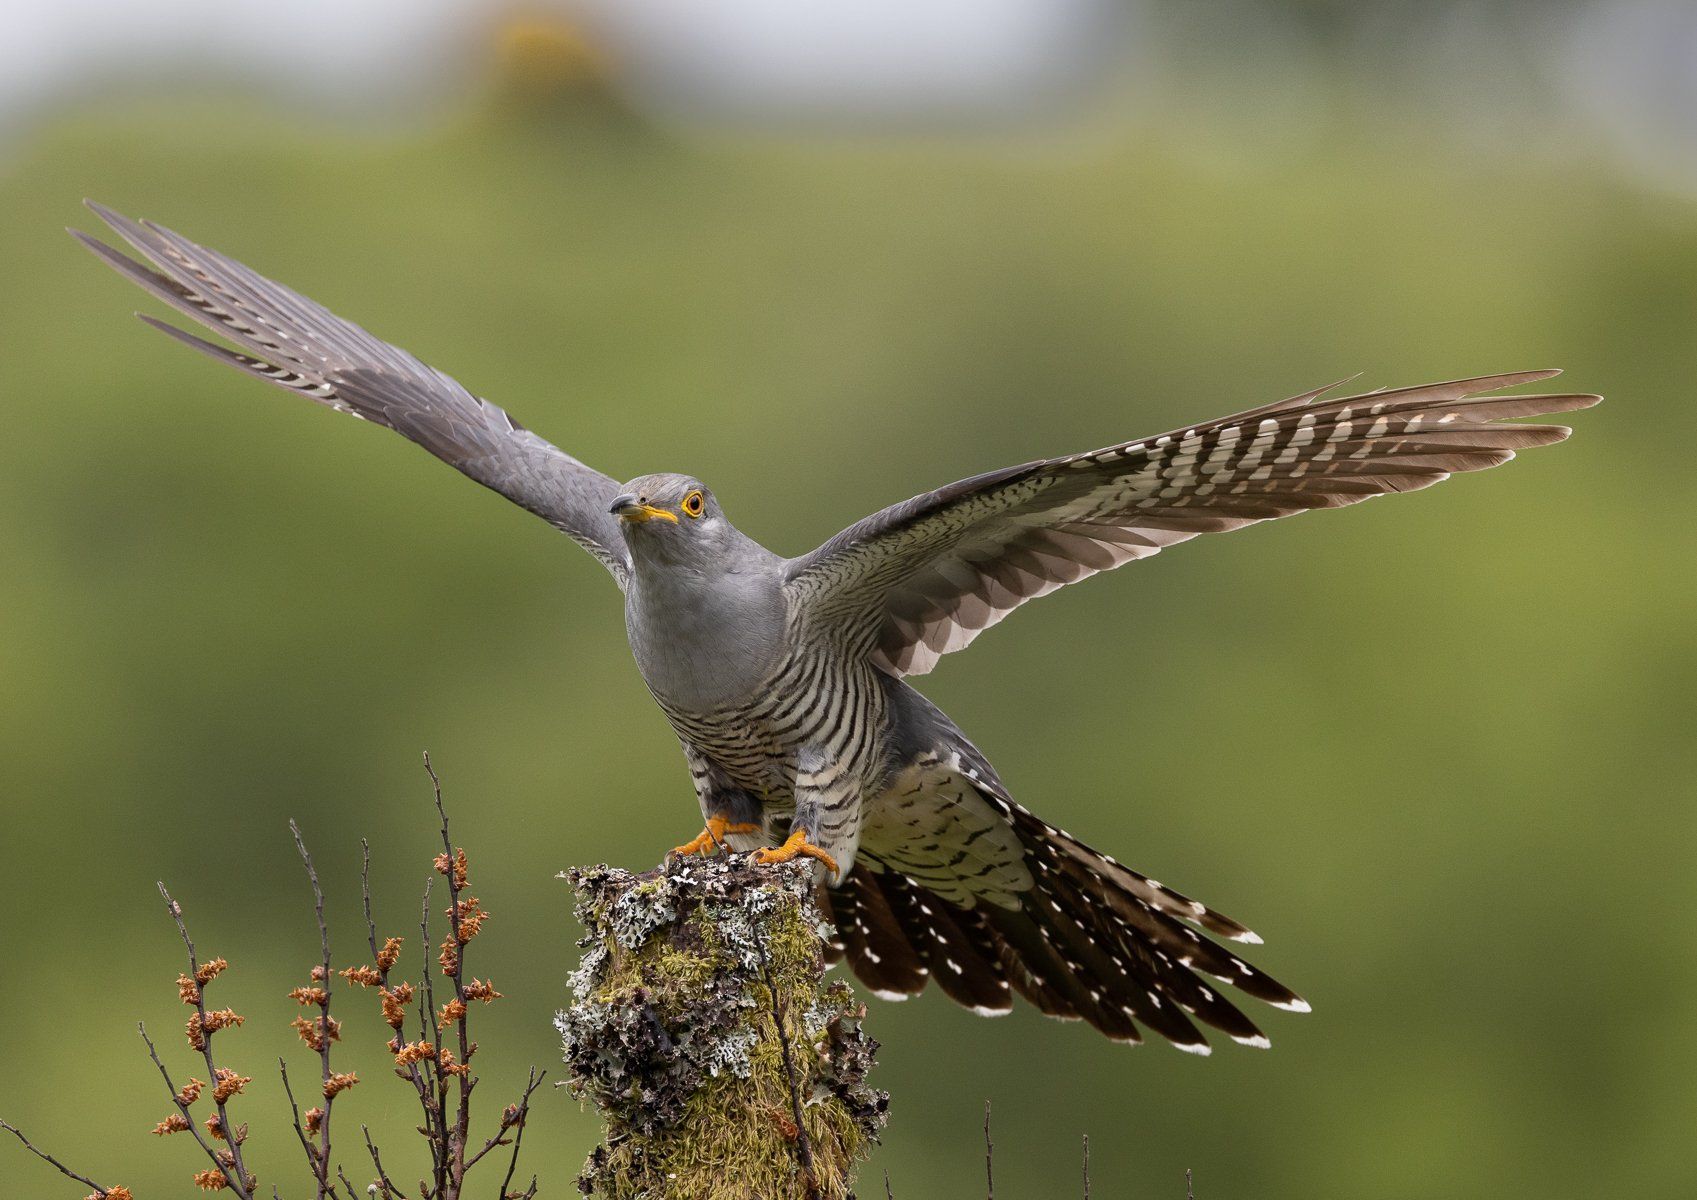 a cuckoo alighting on a perch